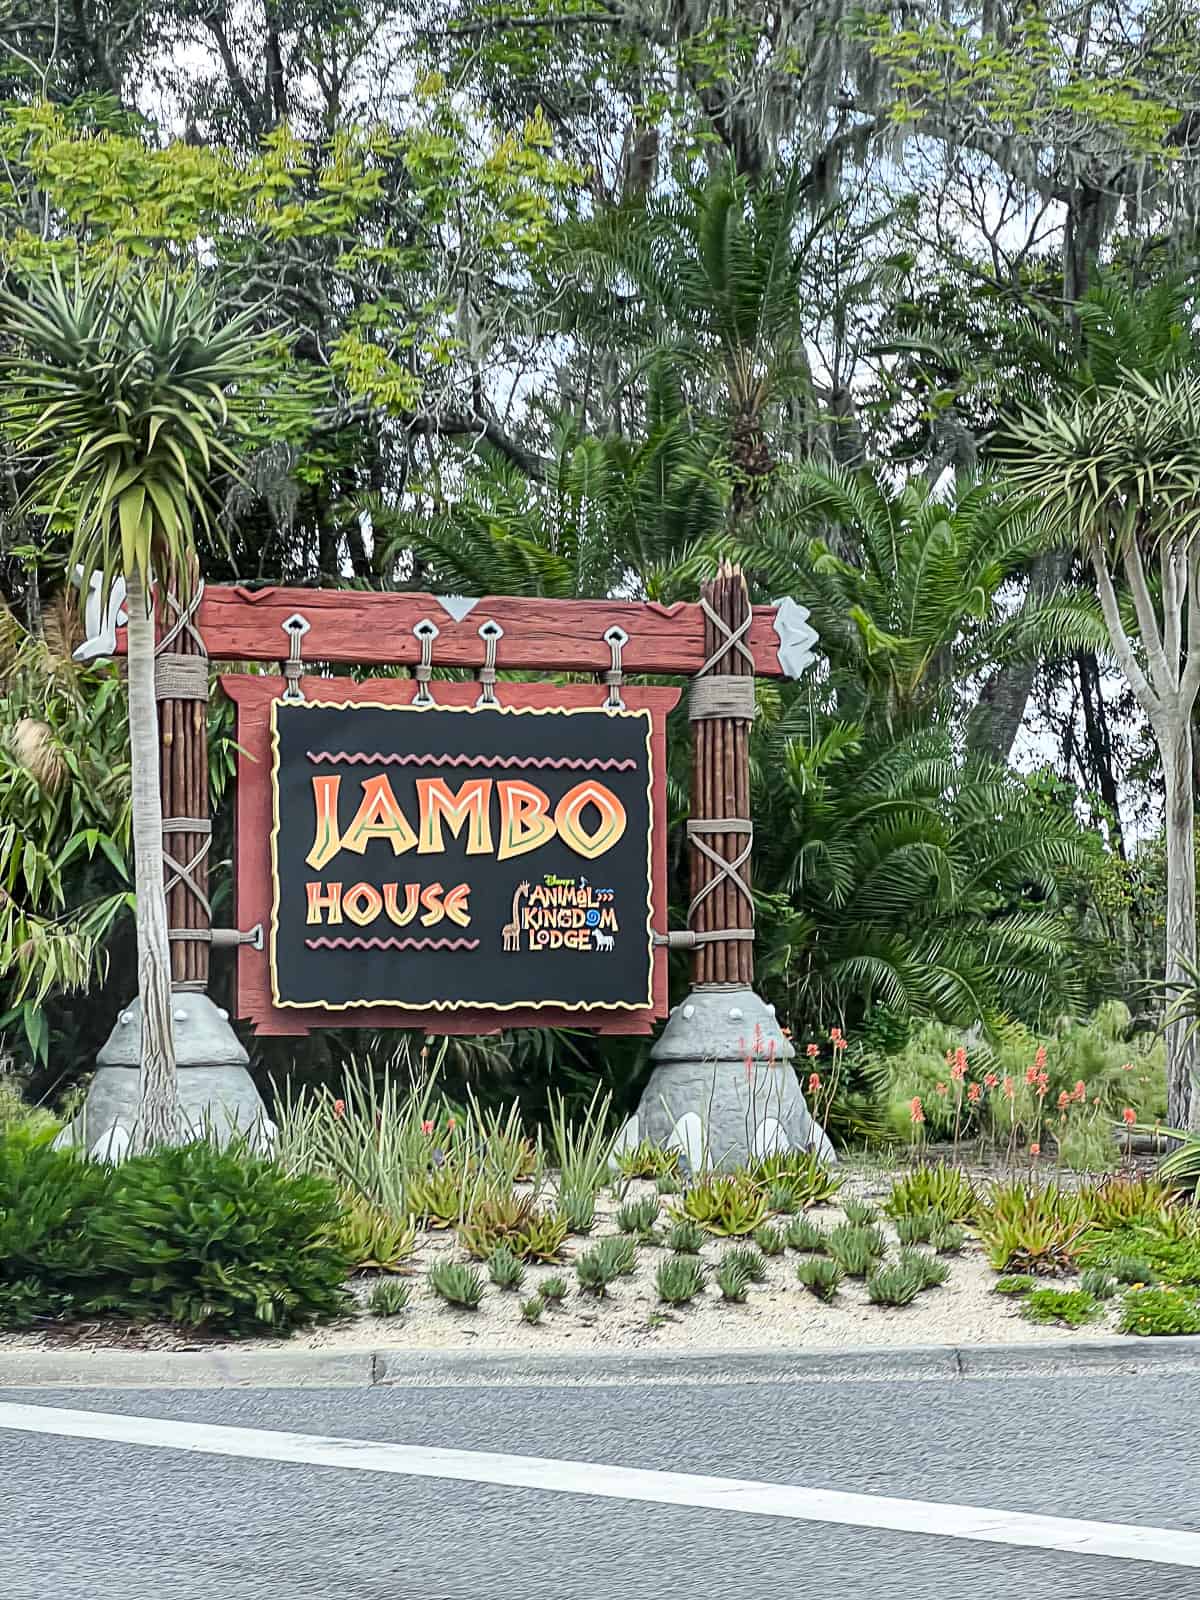 Jambo House Sign at Animal Kingdom Lodge at Walt Disney World